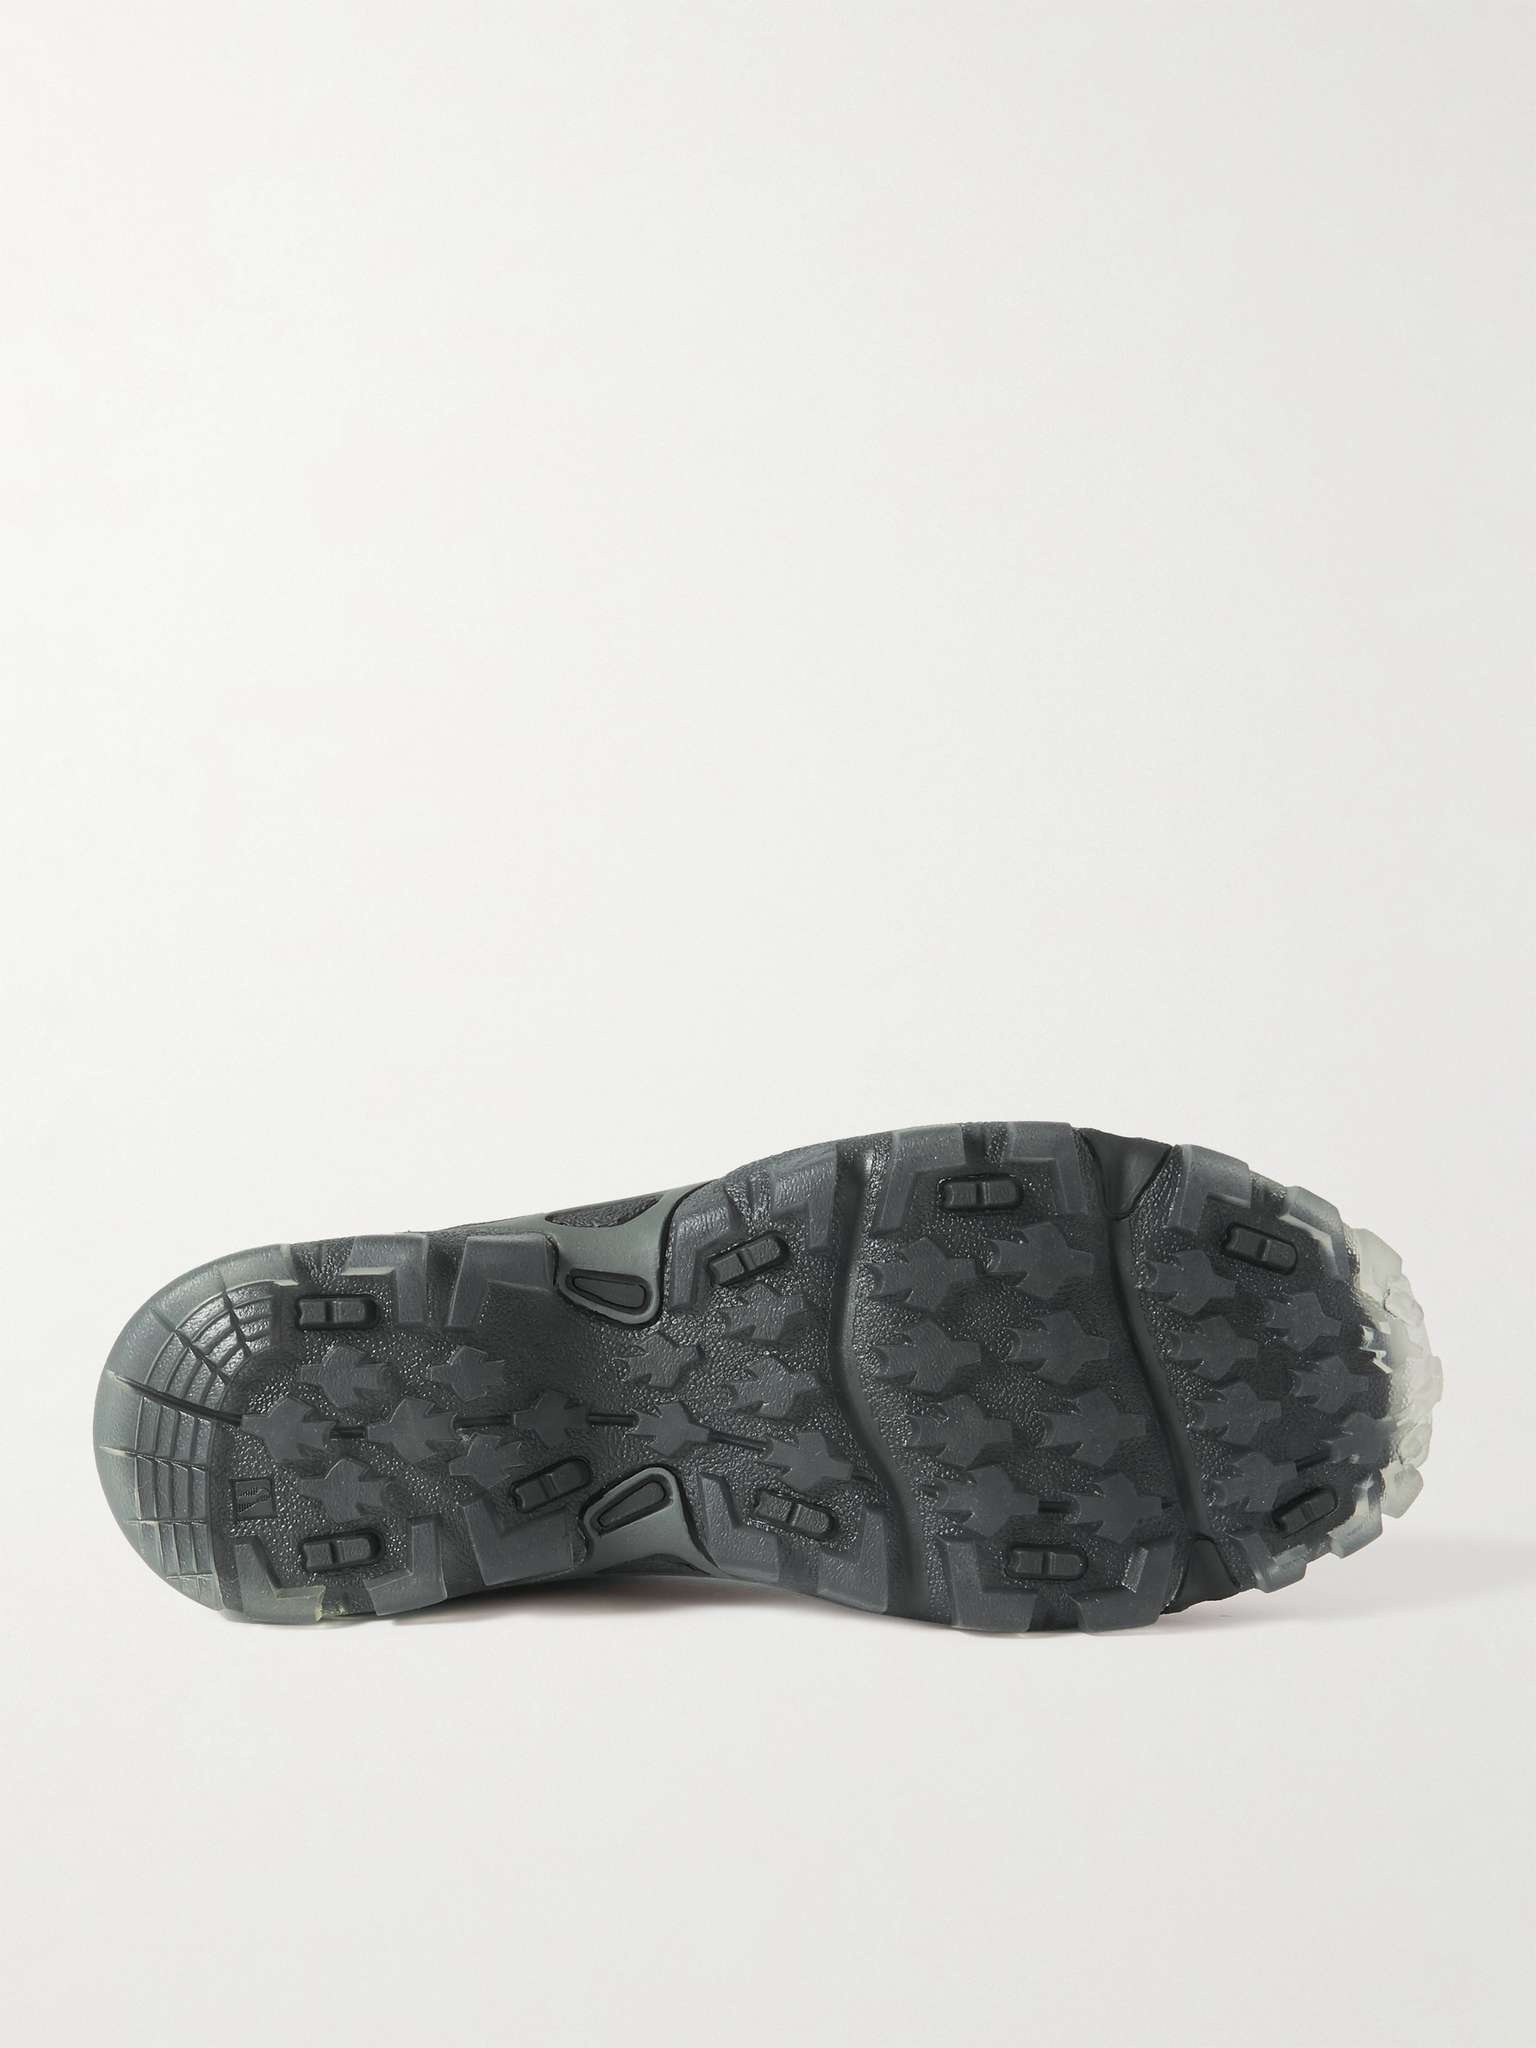 Neoprene-Trimmed Leather Slip-On Sneakers - 5